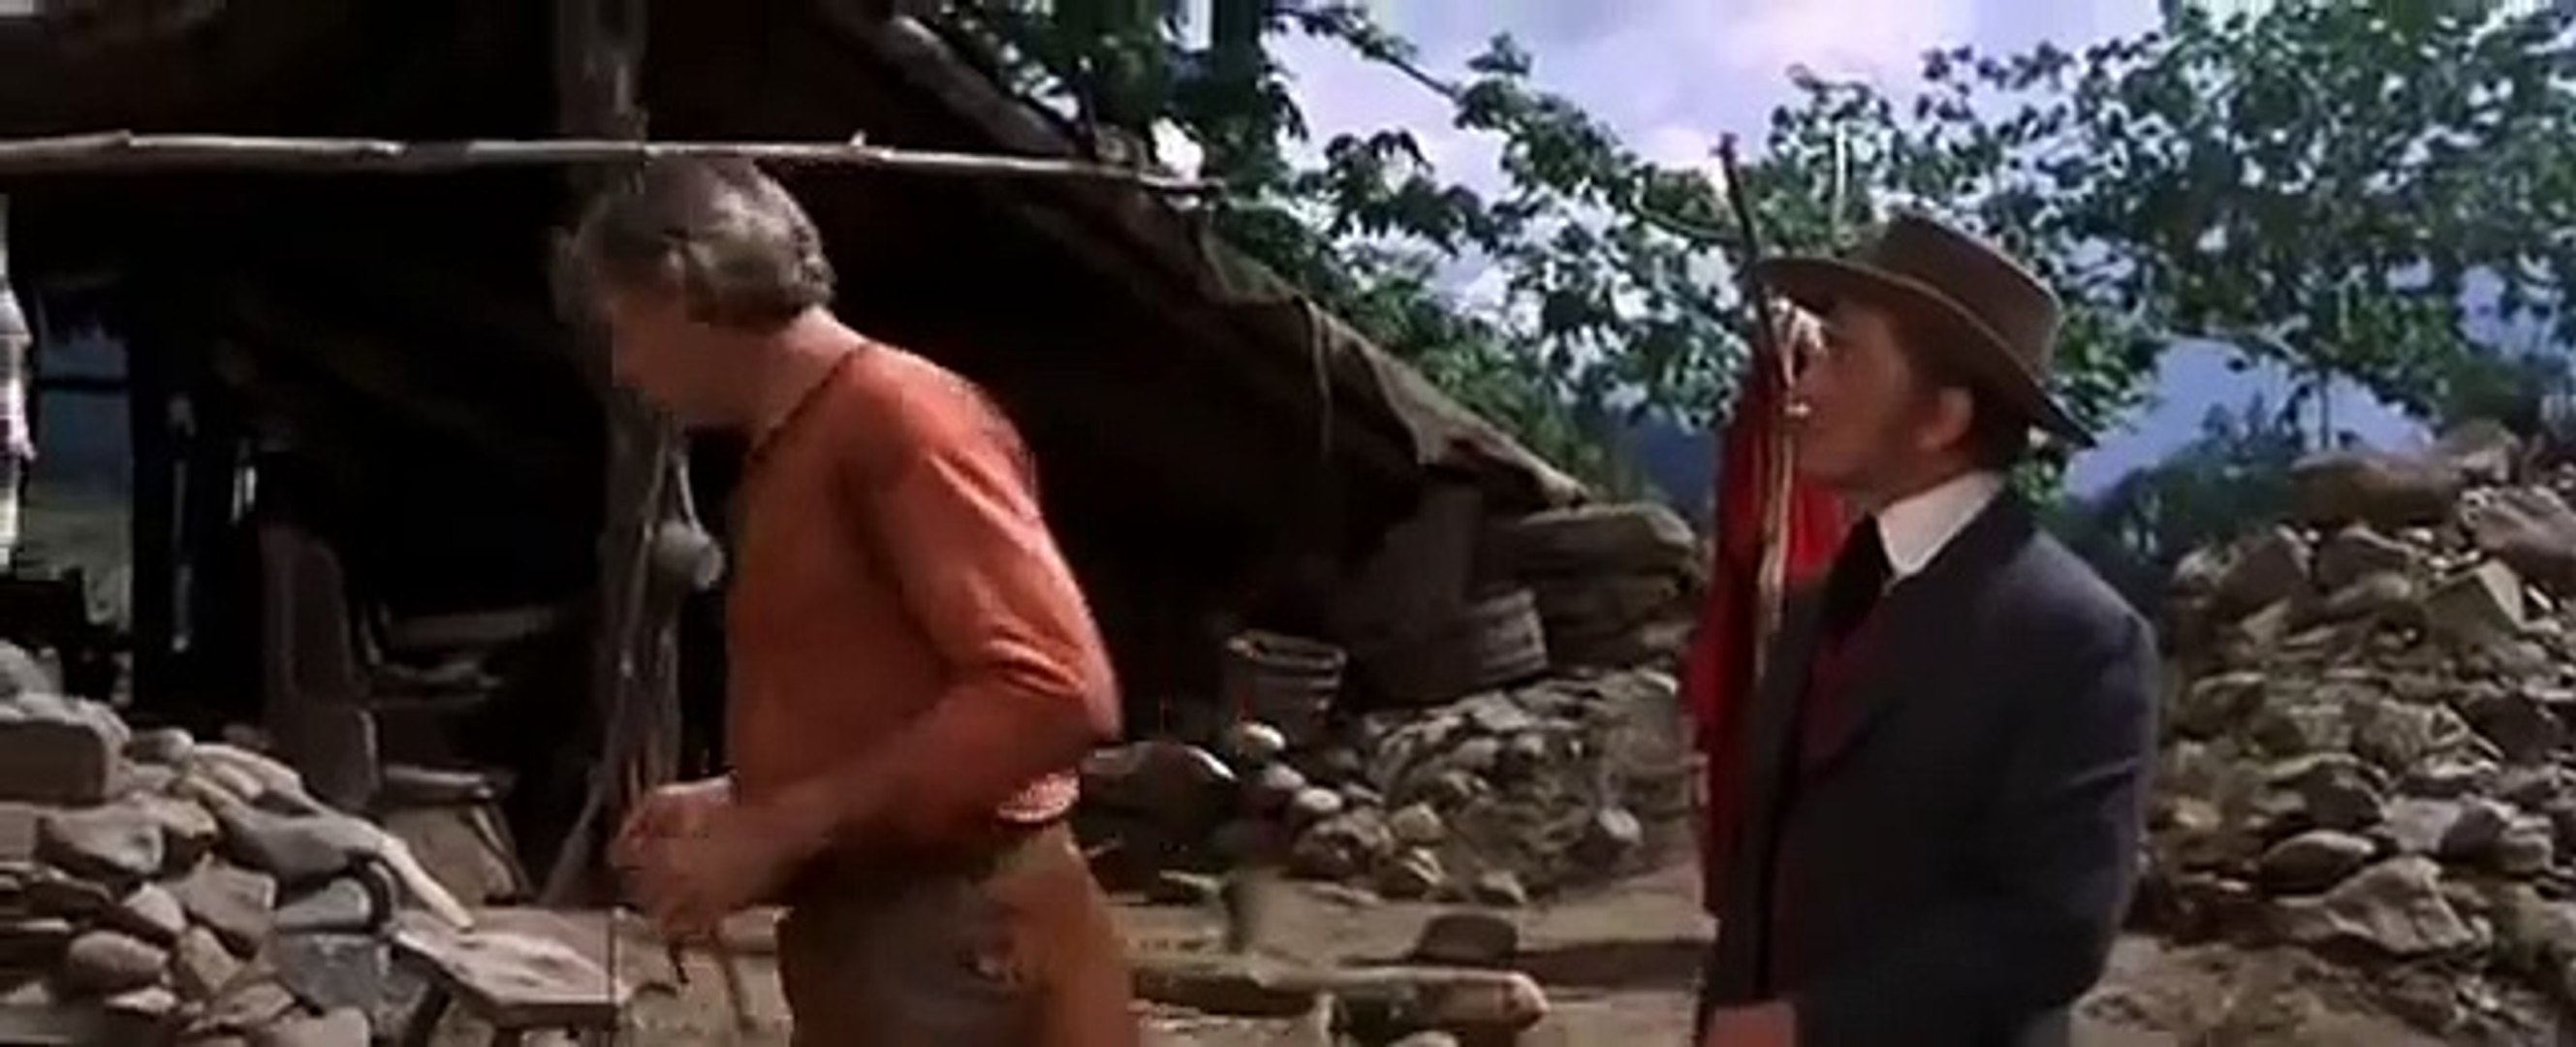 The Way West 1967 Kirk Douglas Robert Mitchum Full Length Western Movie -  video Dailymotion